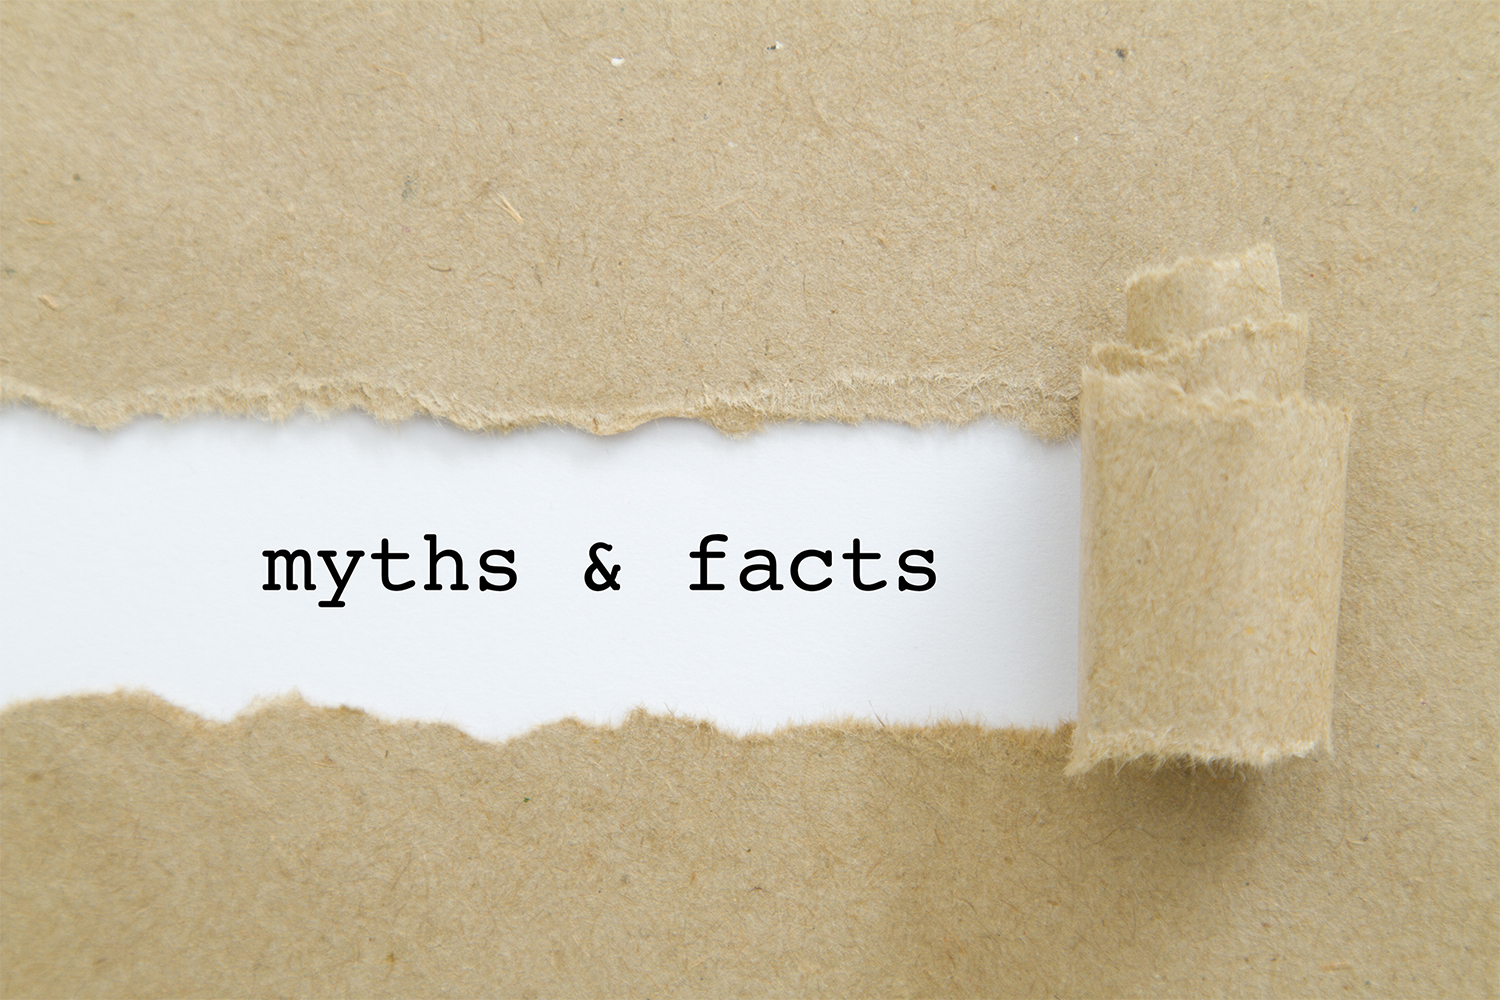 Myths & Facts